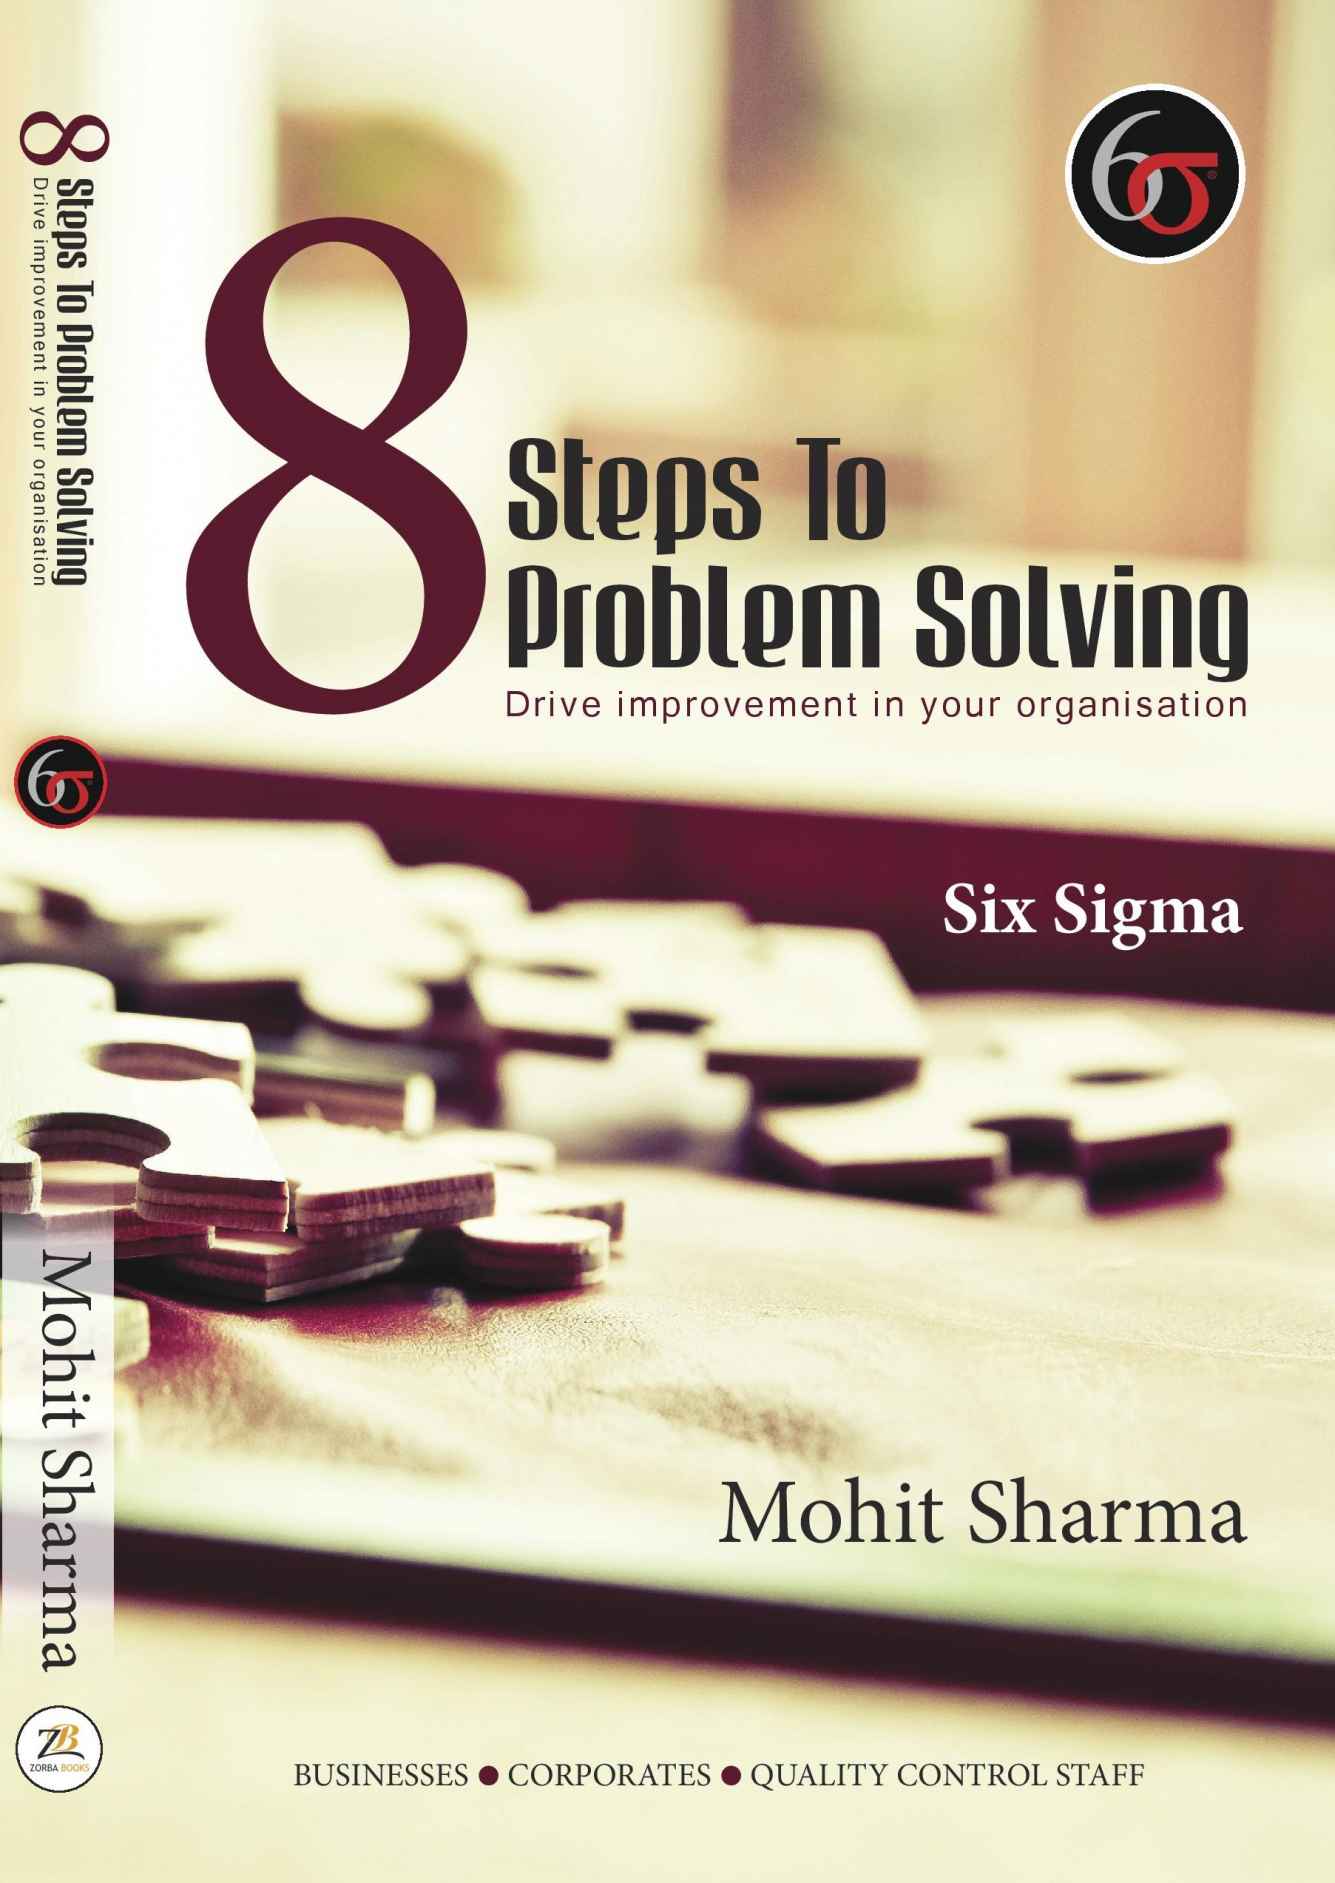 دانلود کیندل کتاب Steps to Problem Solving دانلود کتاب Steps to Problem Solving – Six Sigma BY MOHIT SHARMA ISBN 978-93-86407-36-8 گیگاپیپر